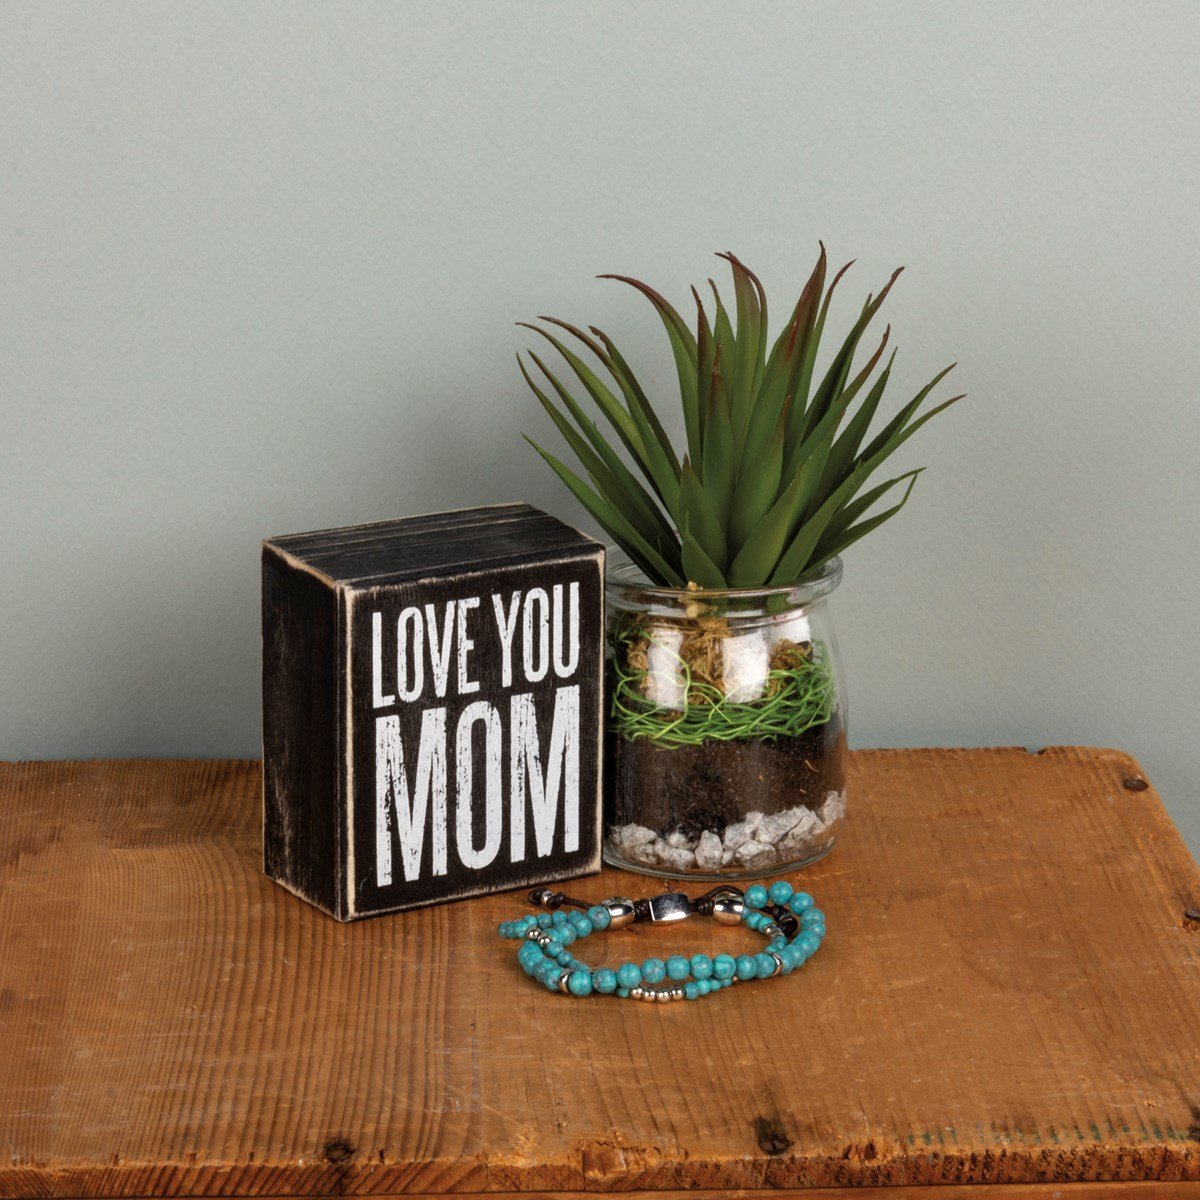 Love You Mom Box Sign